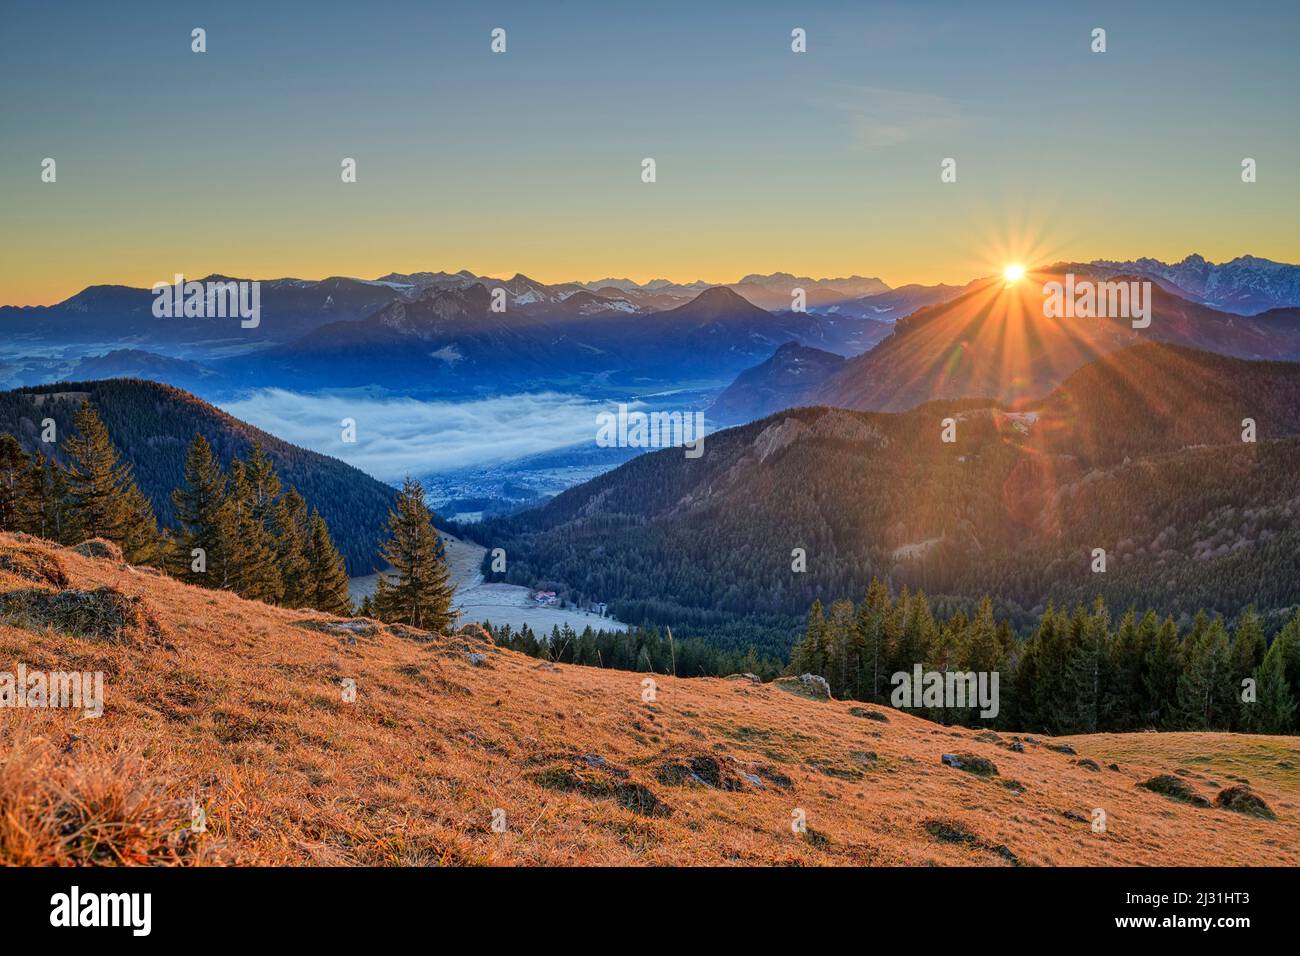 Sunrise Over Inn Valley, Alpi del Chiemgau, Loferer Steinberge e Kaiser Mountains, da Farrenpoint, Mangfall Mountains, Alpi bavaresi, alta Baviera, Baviera, Germania Foto Stock